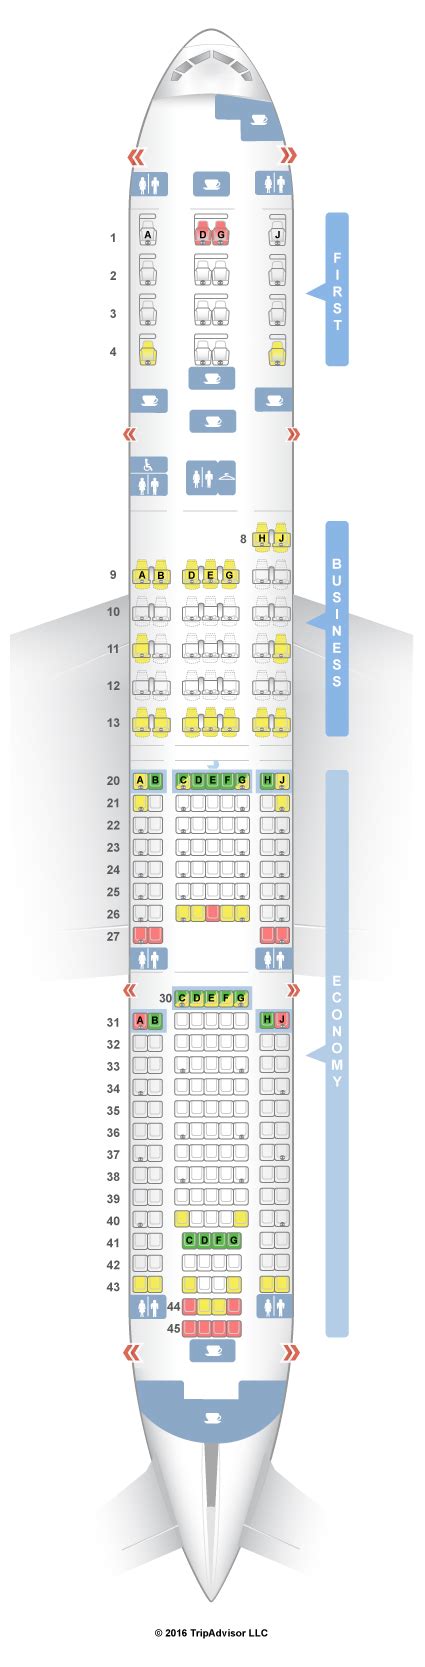 Seatguru Seat Map American Airlines Boeing 777 200 777 V1